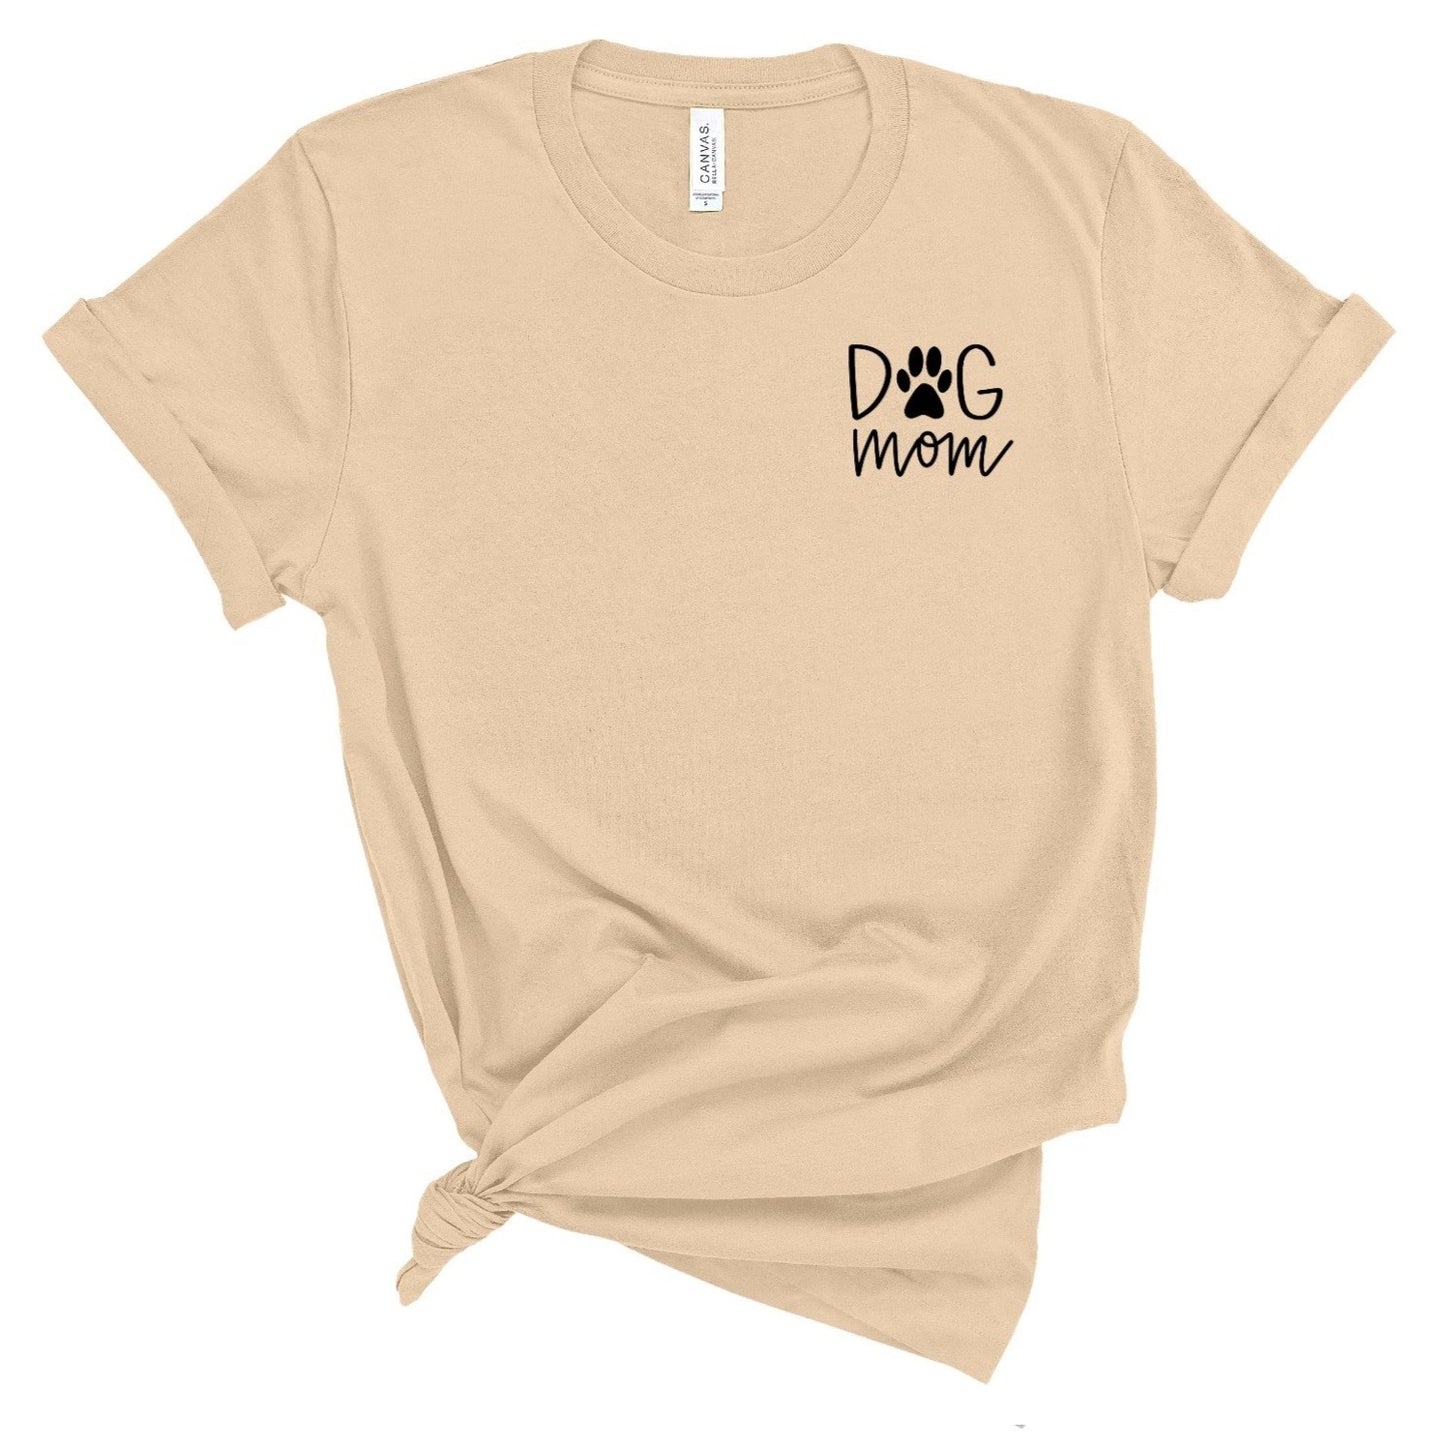 Cream dog mom t-shirt